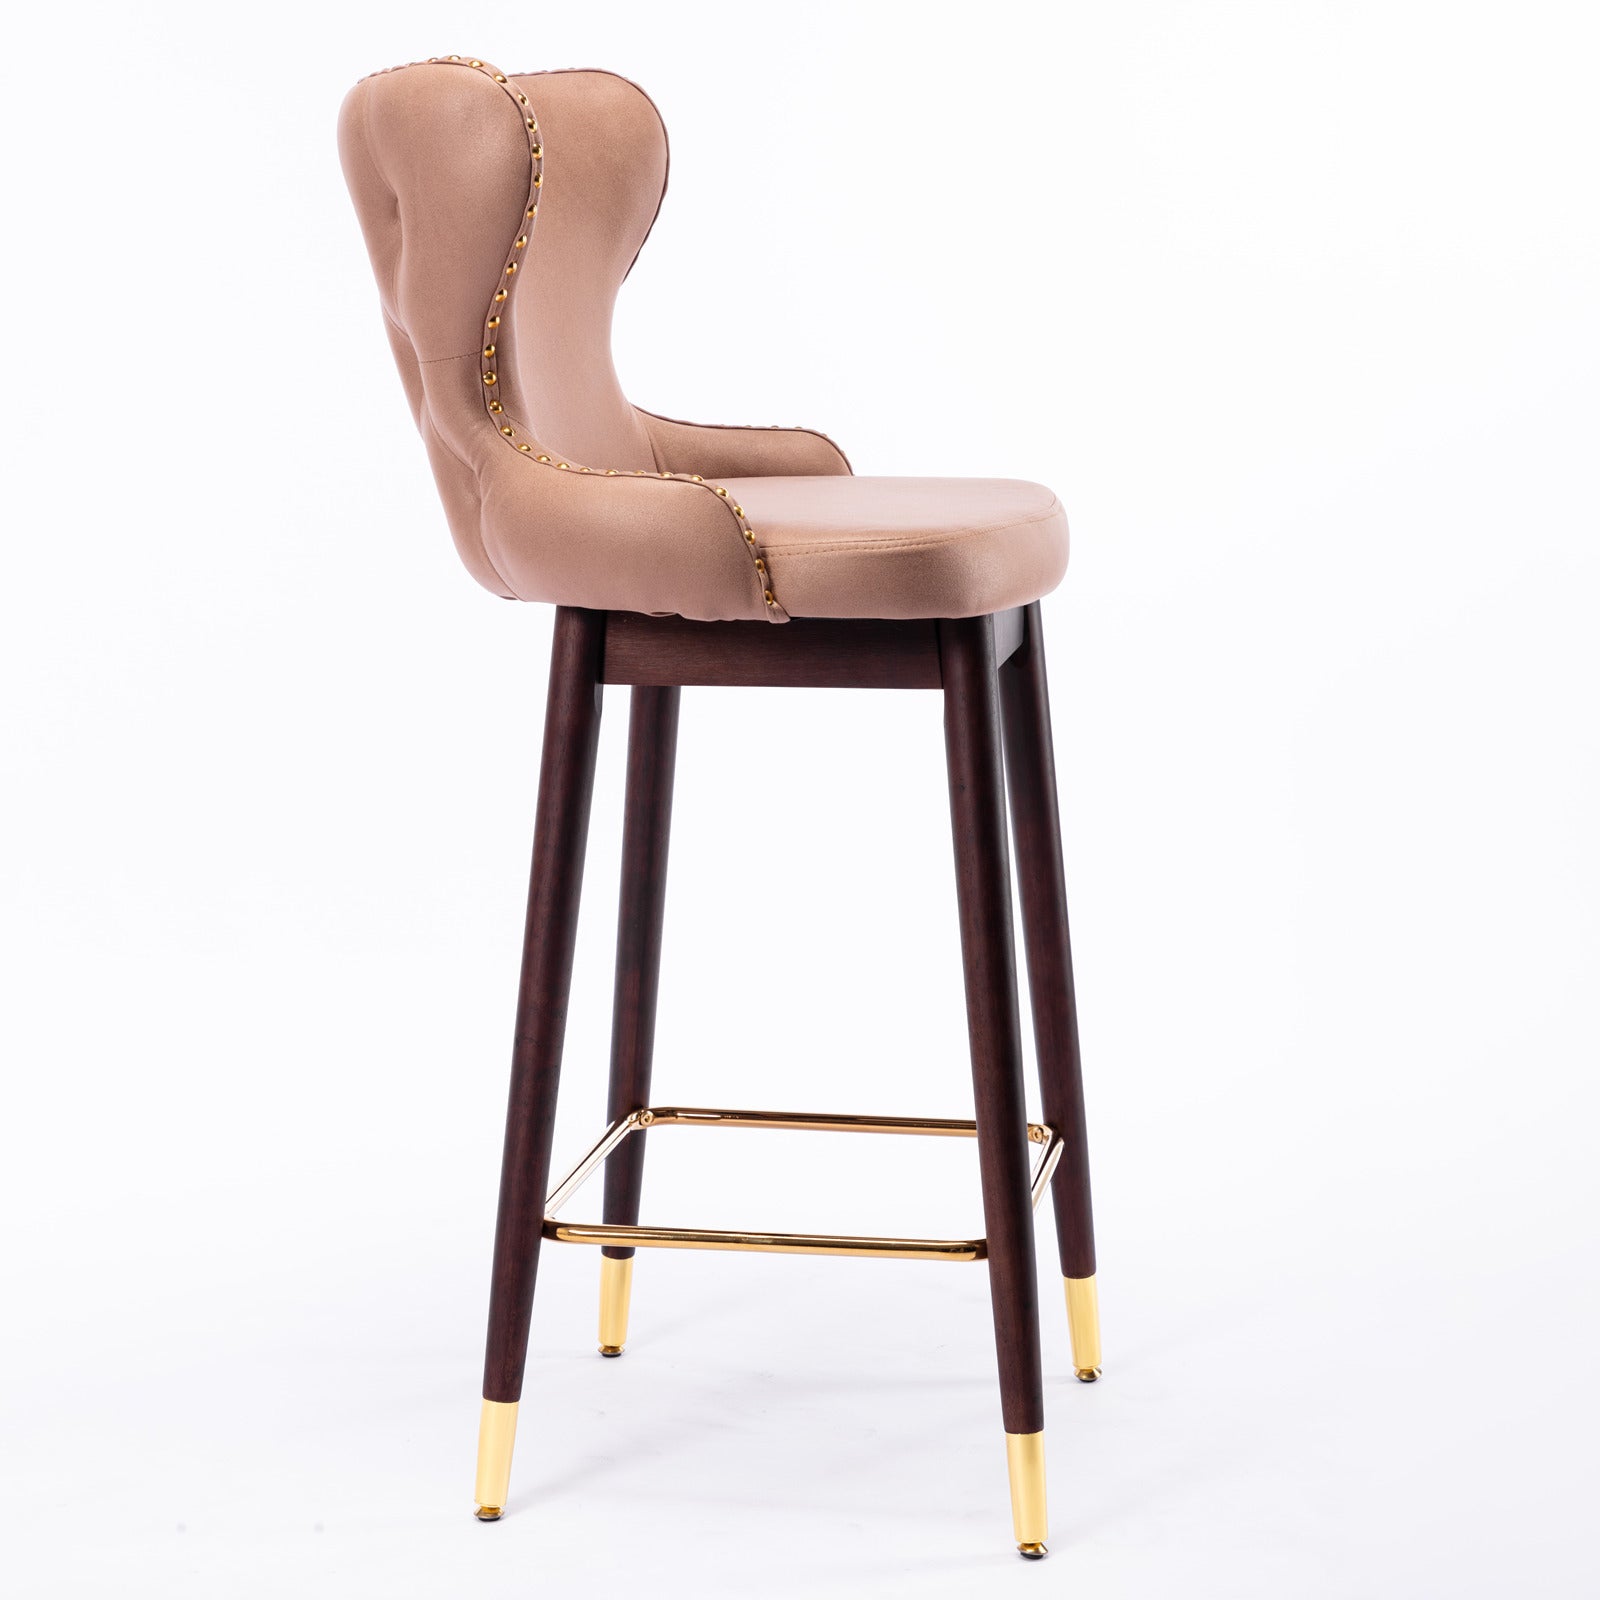 Modern Leathaire Fabric bar chairs, Tufted Gold Nailhead Trim Gold Decoration Bar stools (Set of 2) - Khaki